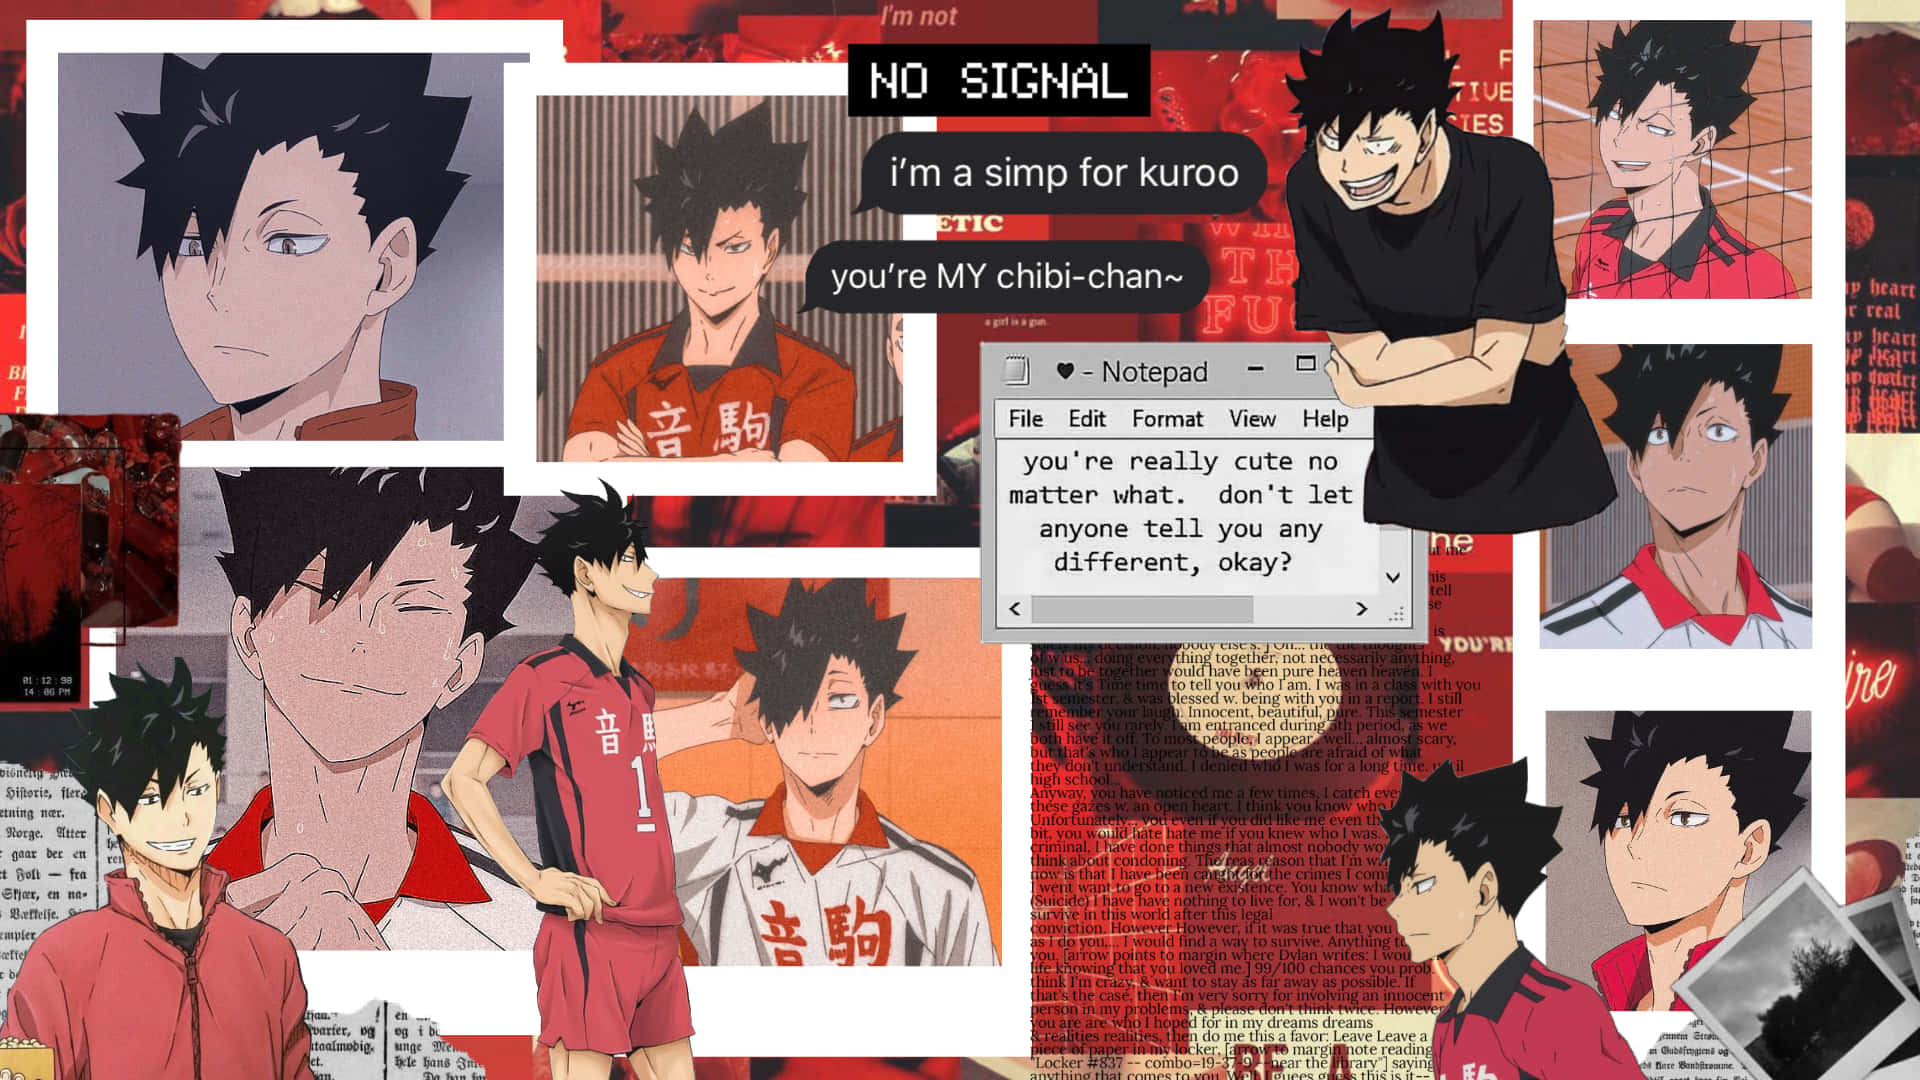 Download Aesthetic Desktop featuring the manga/anime 'Haikyuu!' Wallpaper